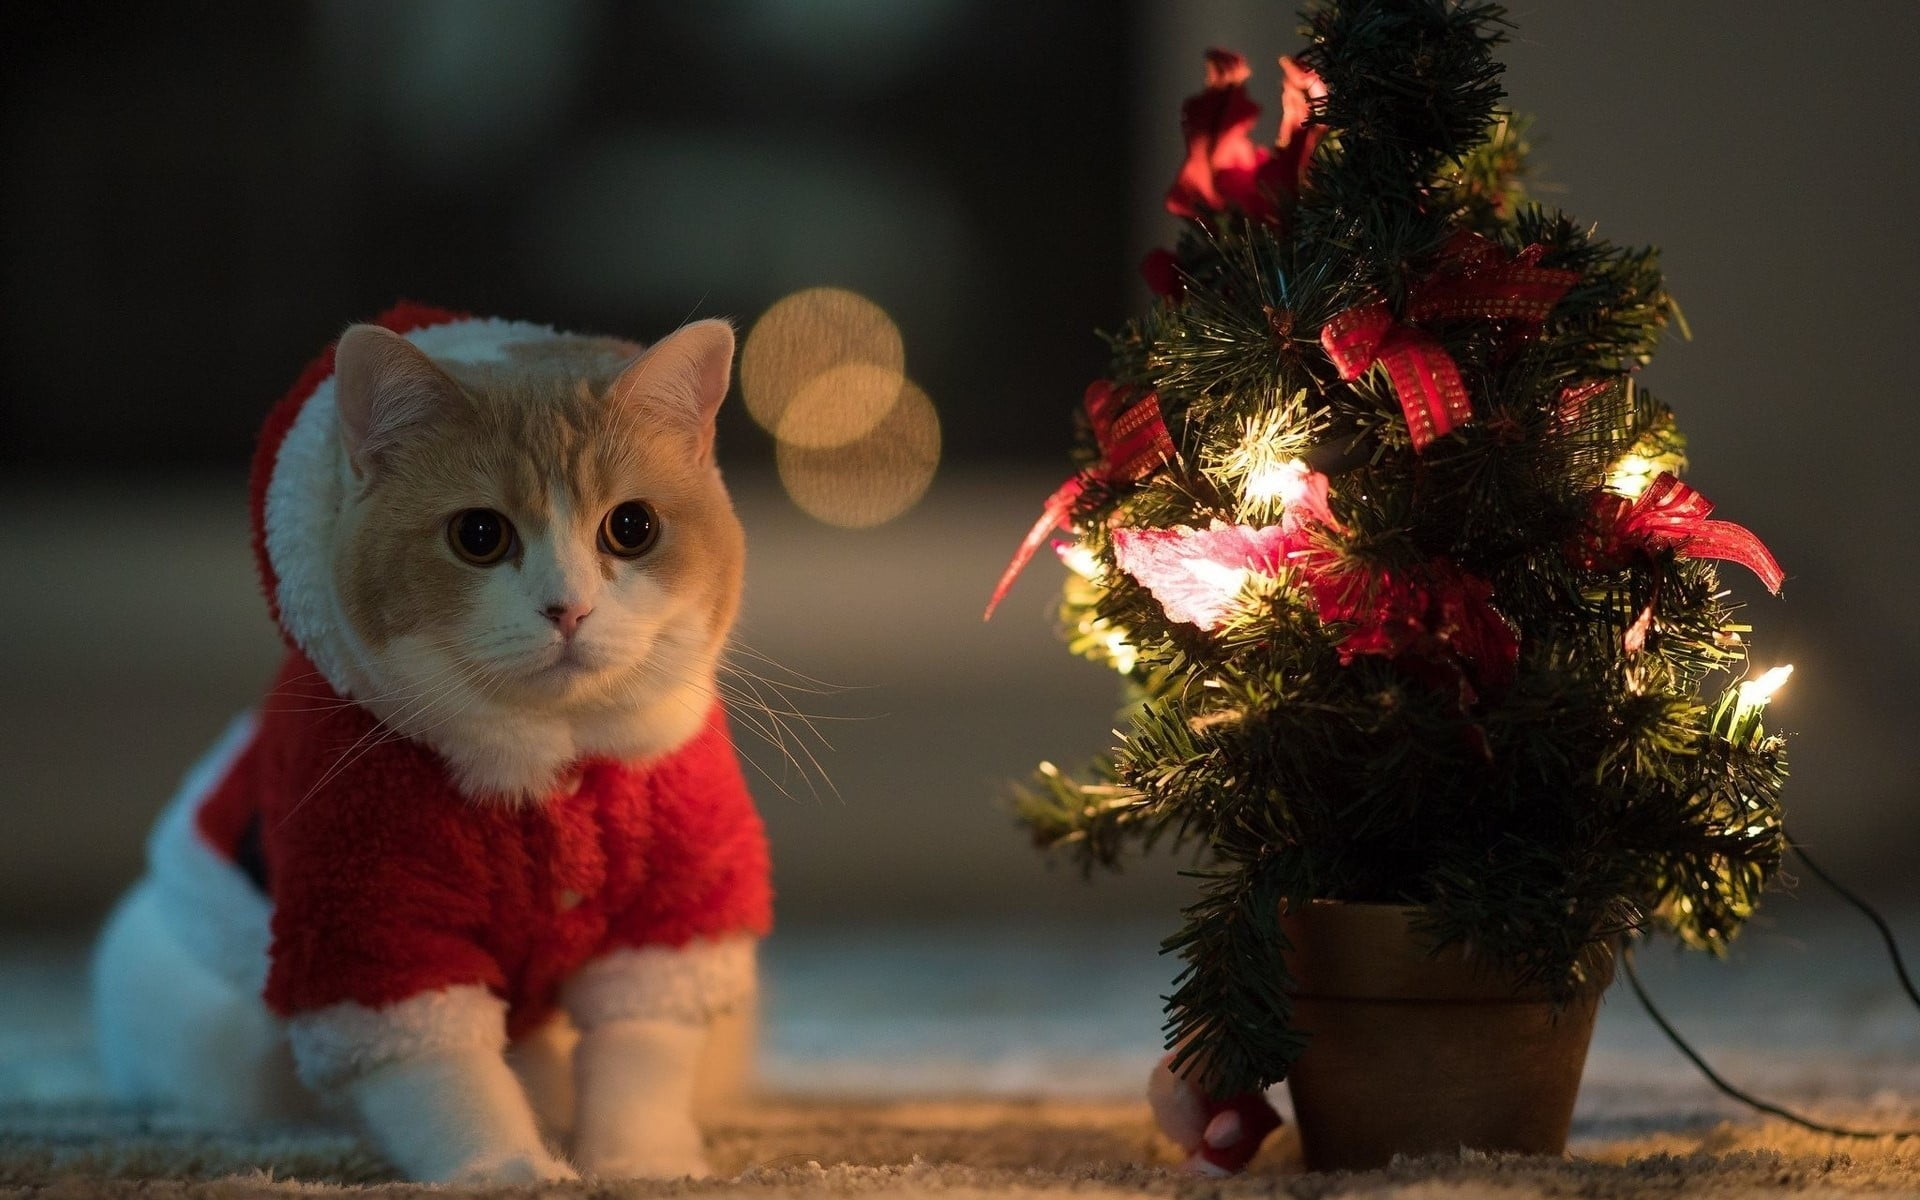 orange and white cat with red coat, cat, animals, Christmas Tree, Santa costume